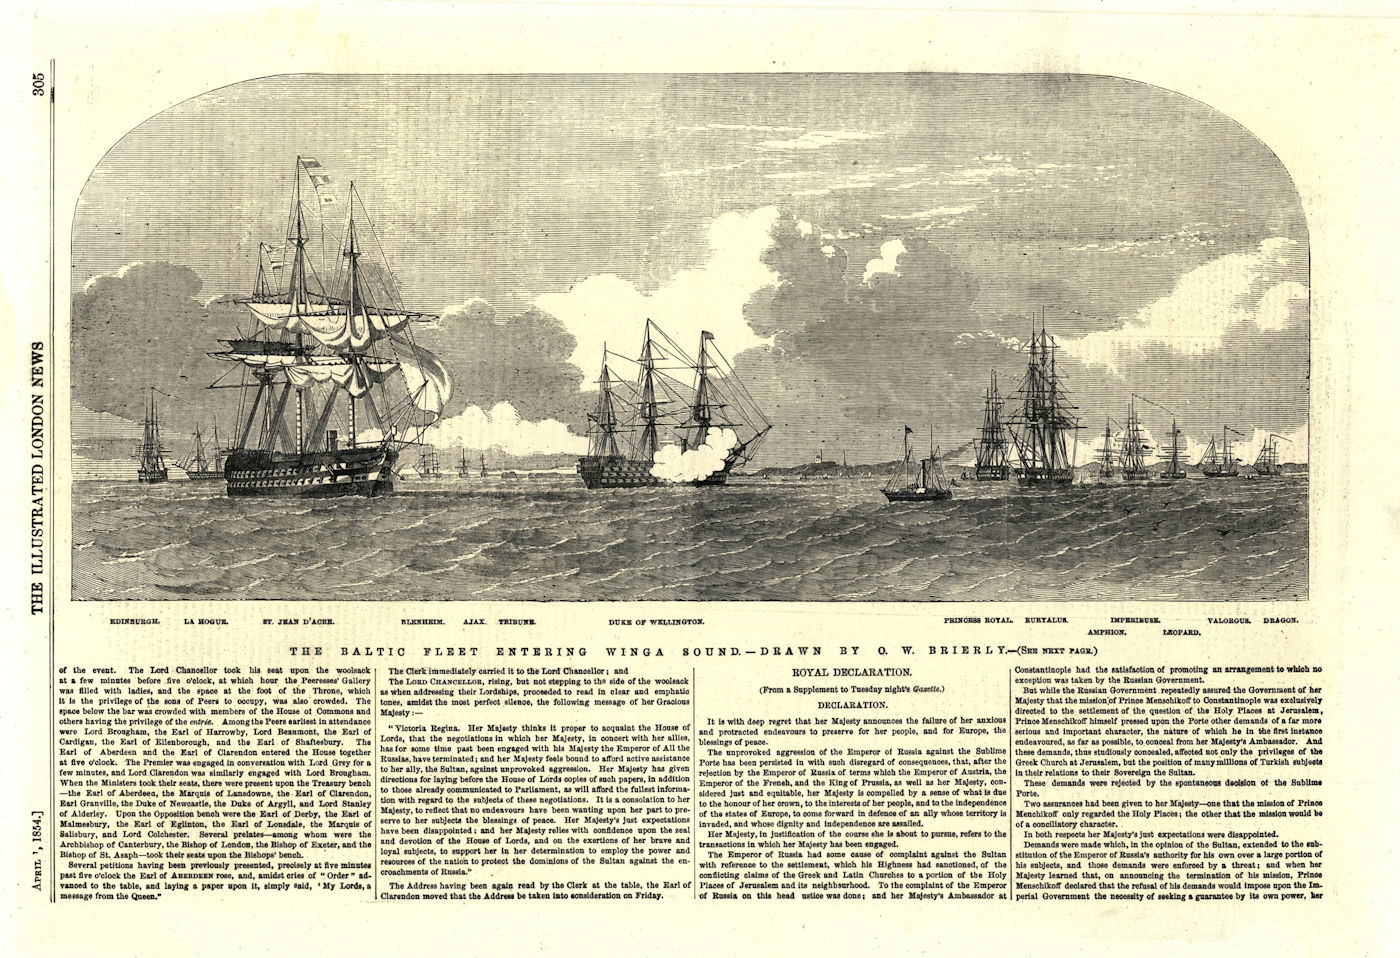 The Baltic Fleet entering Wingo Sound. Hogue Ajax Tribune Euryalus Dragon 1854